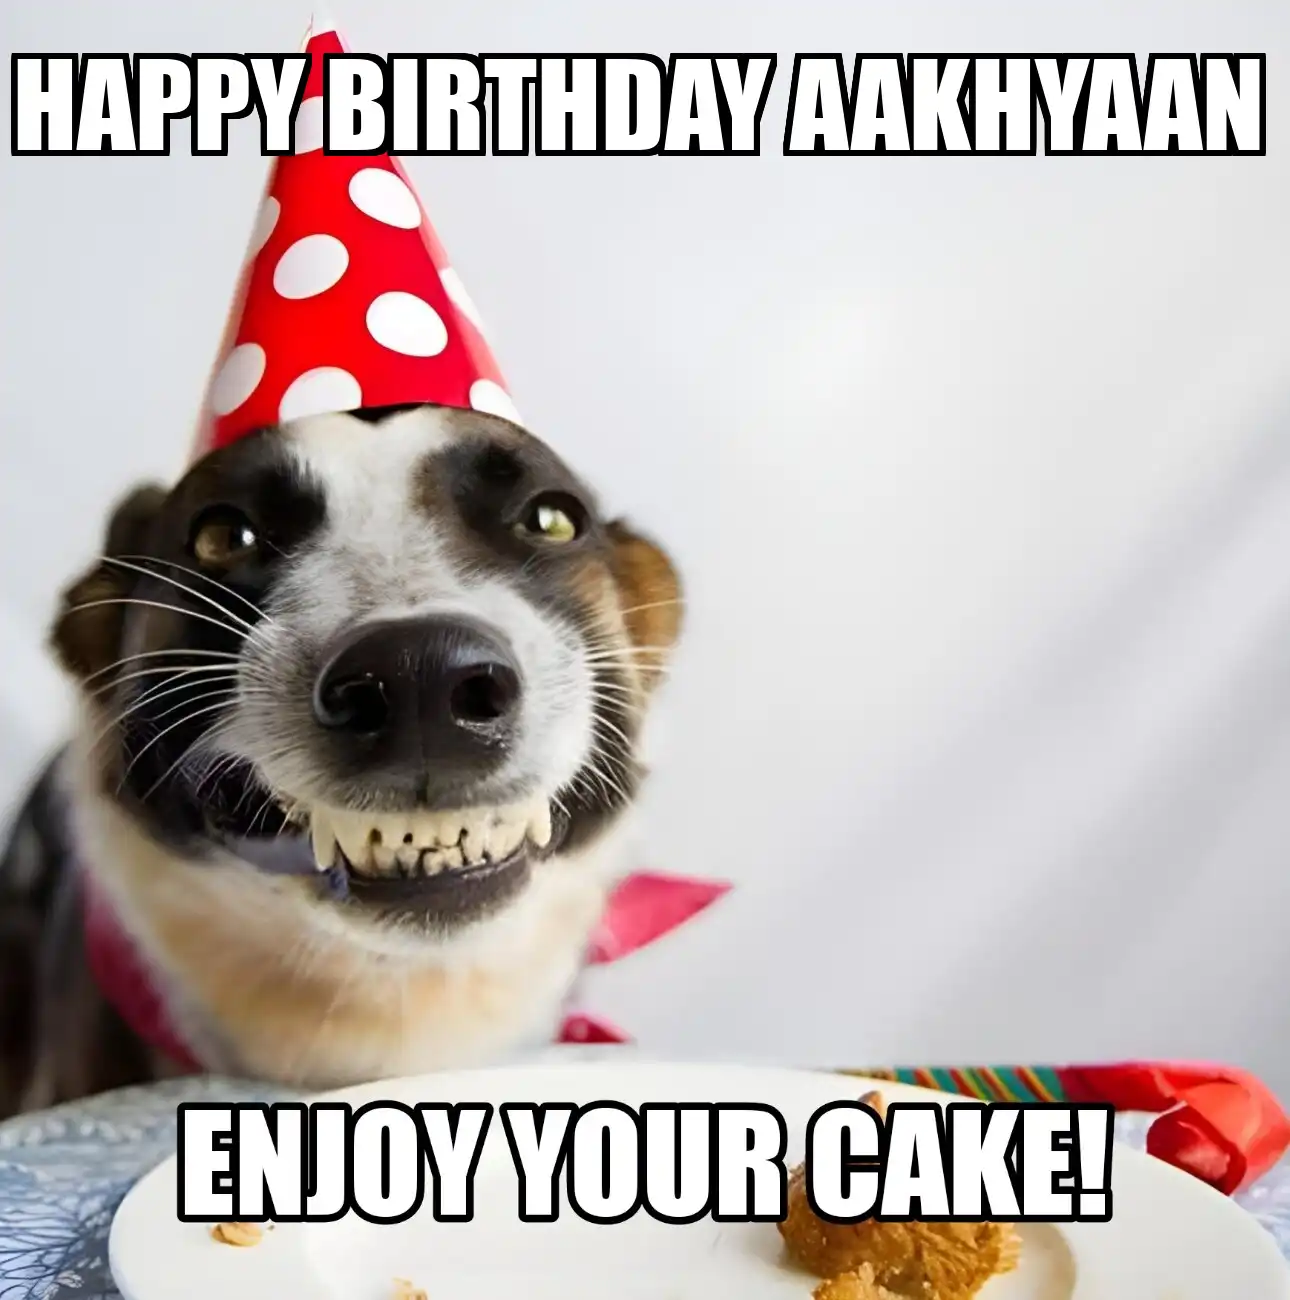 Happy Birthday Aakhyaan Enjoy Your Cake Dog Meme